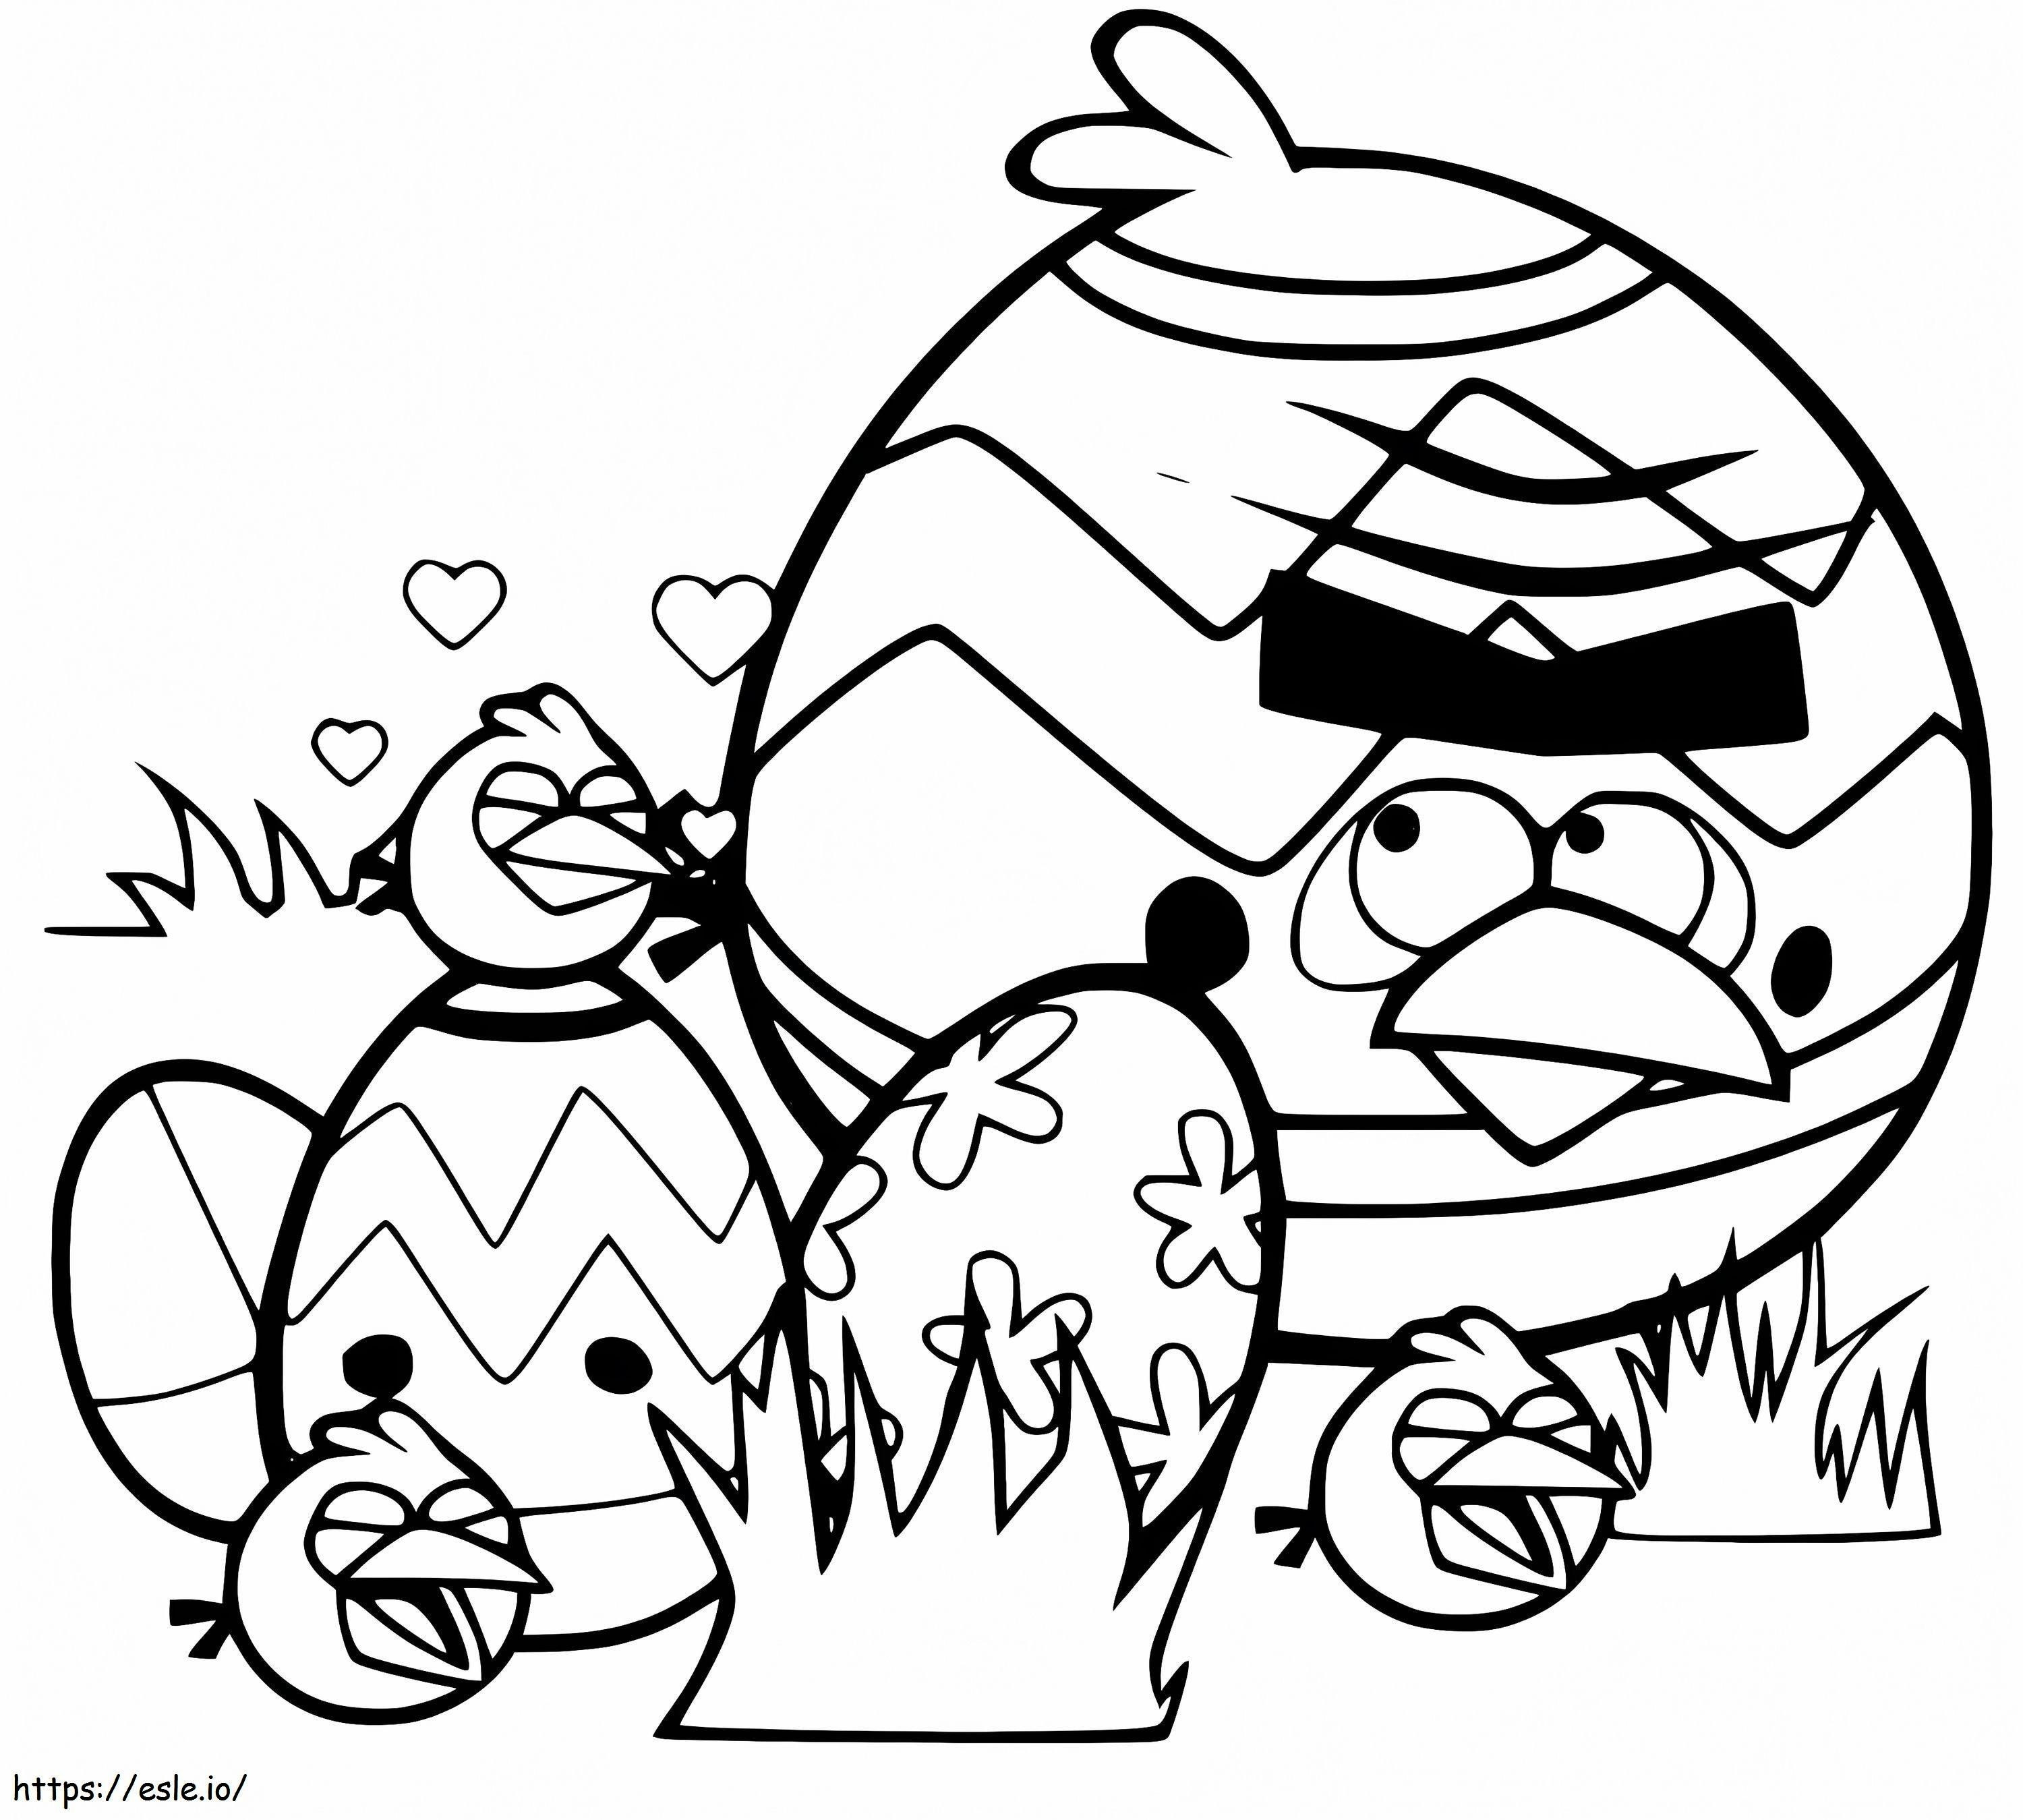 Paskalya Yumurtalı Angry Birds boyama